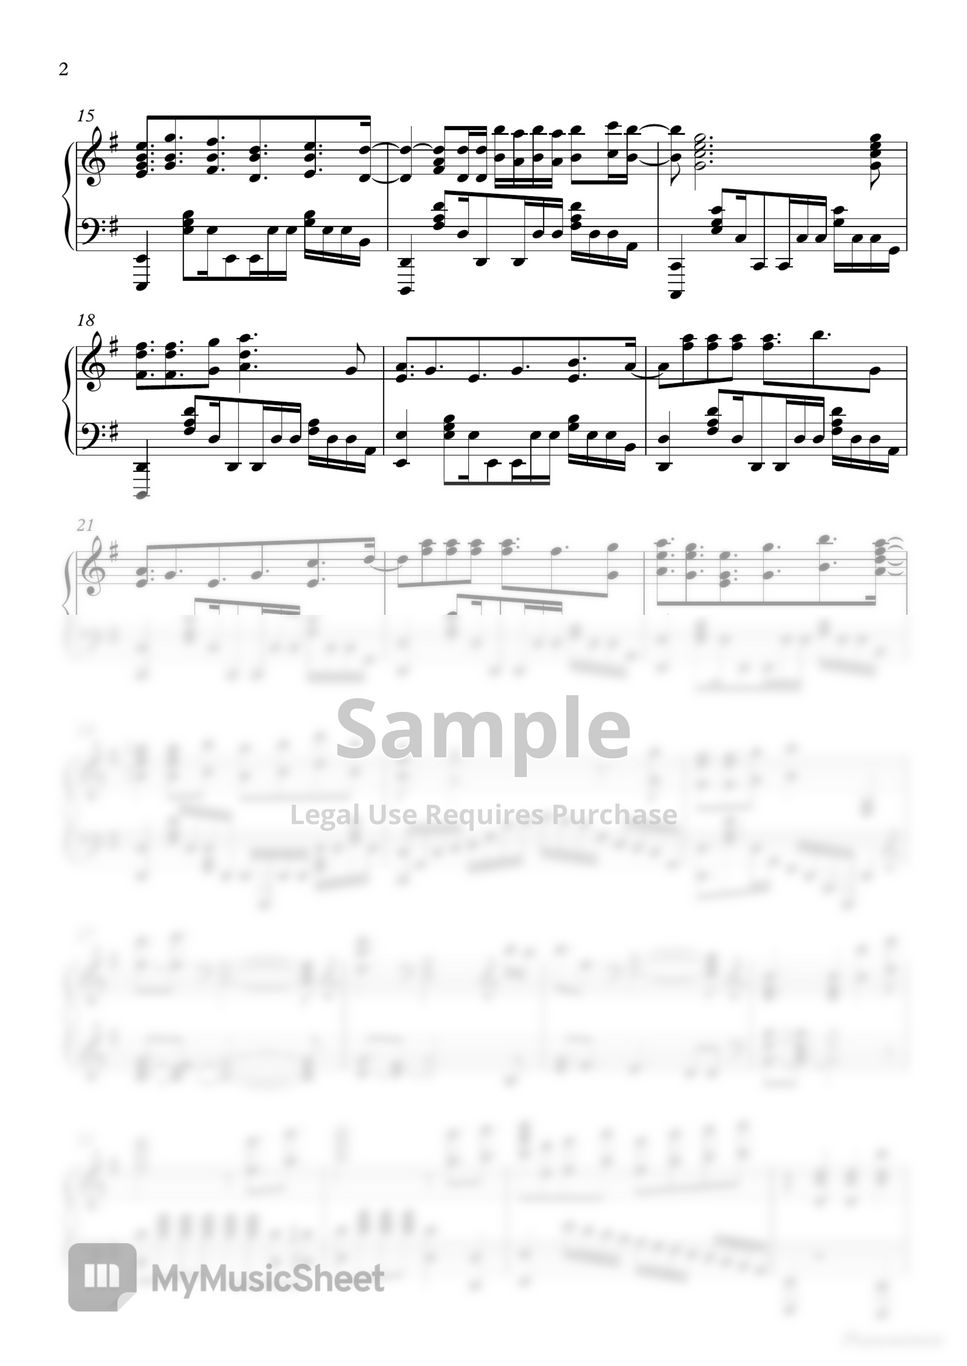 LiSA - Gurenge by Pianominion